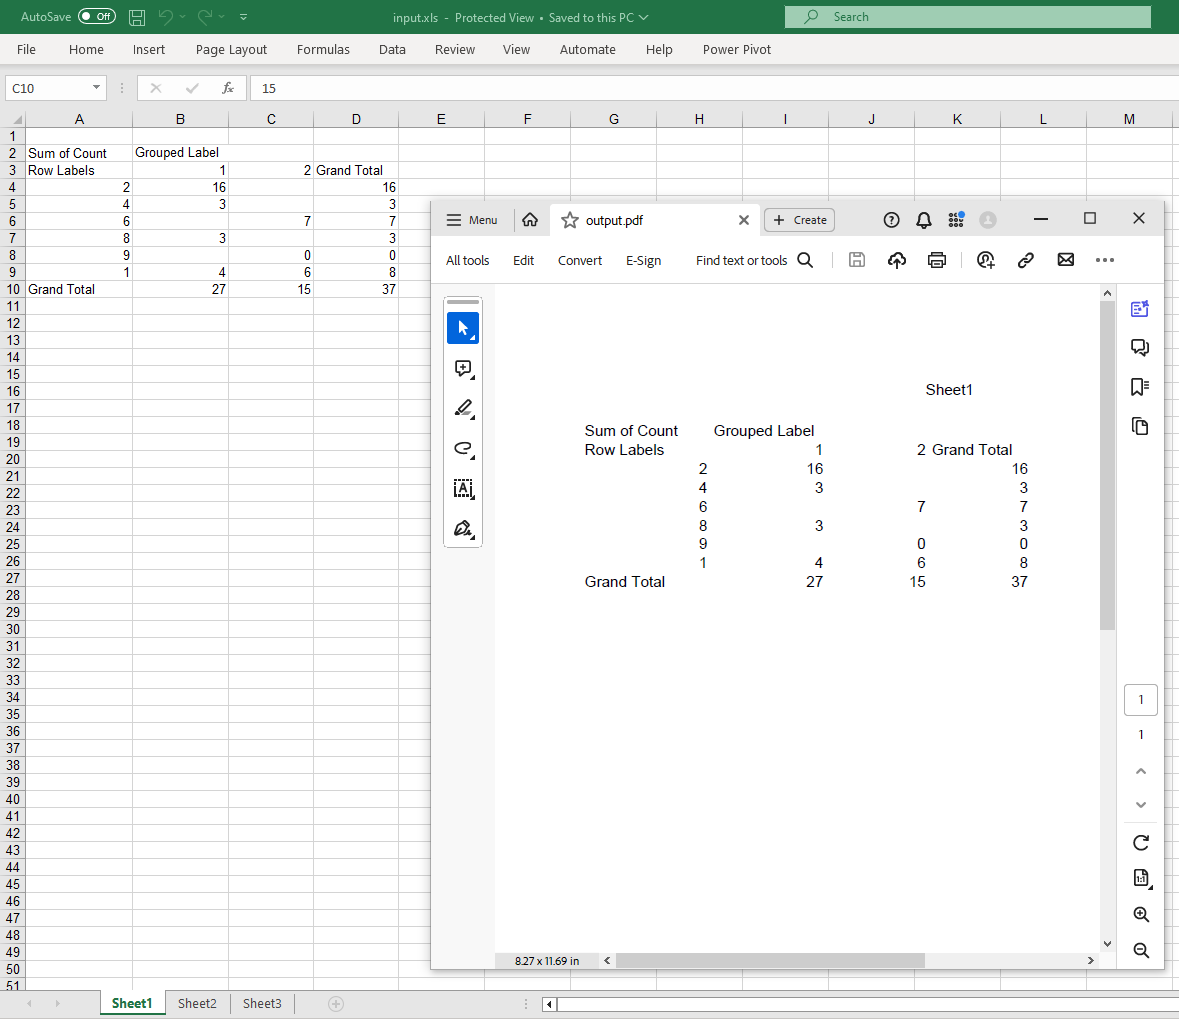 Excel in PDF